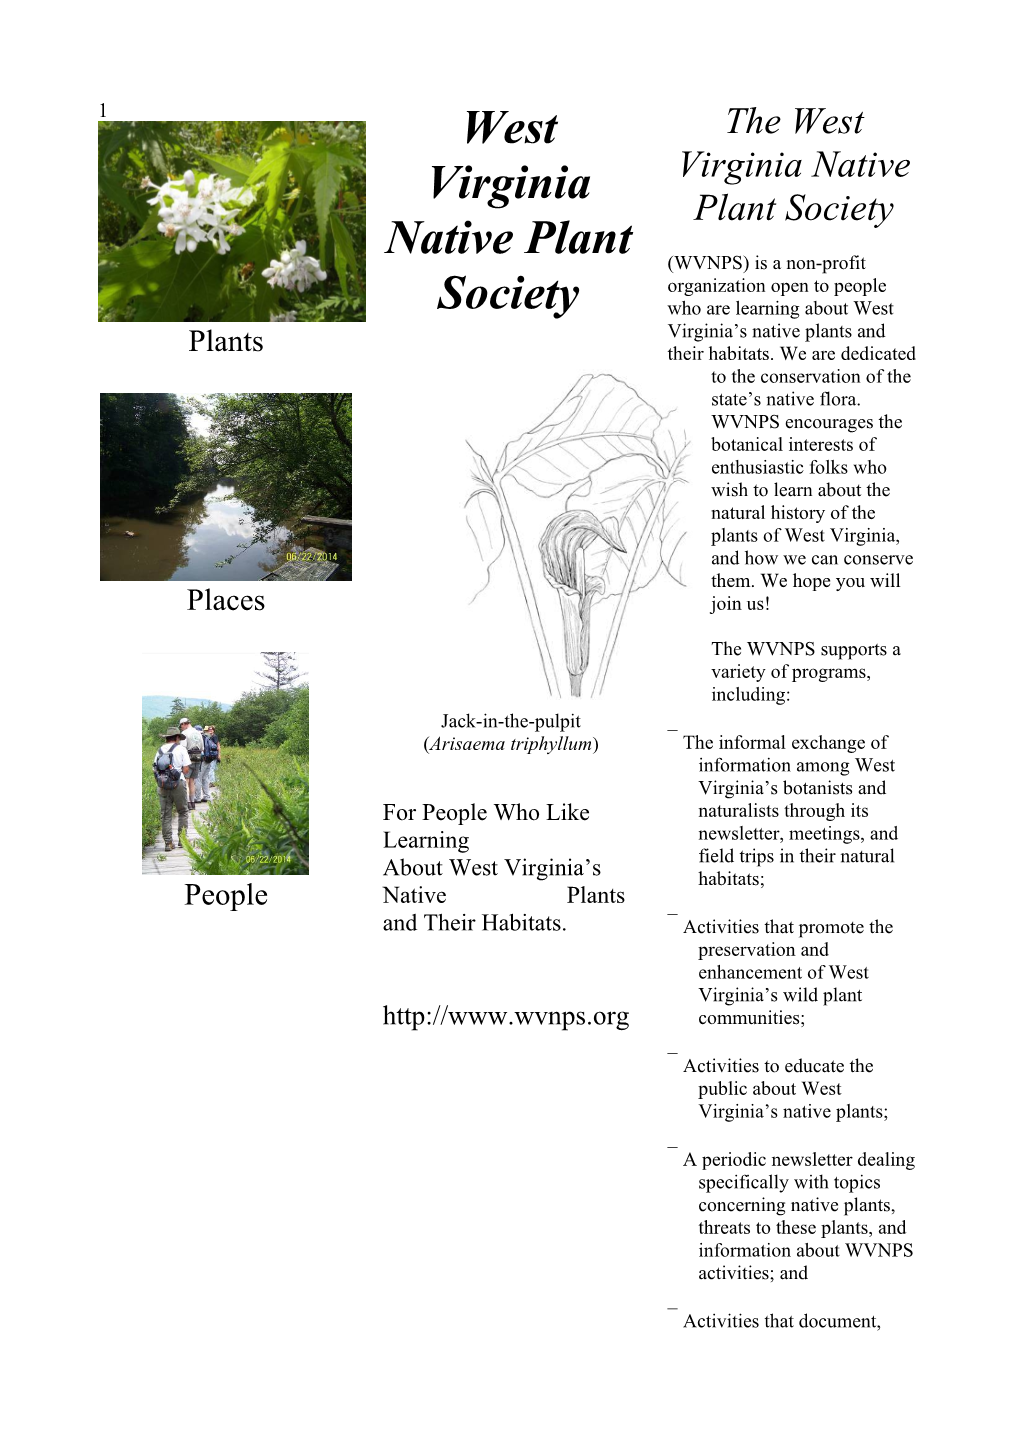 West Virginia Native Plant Society